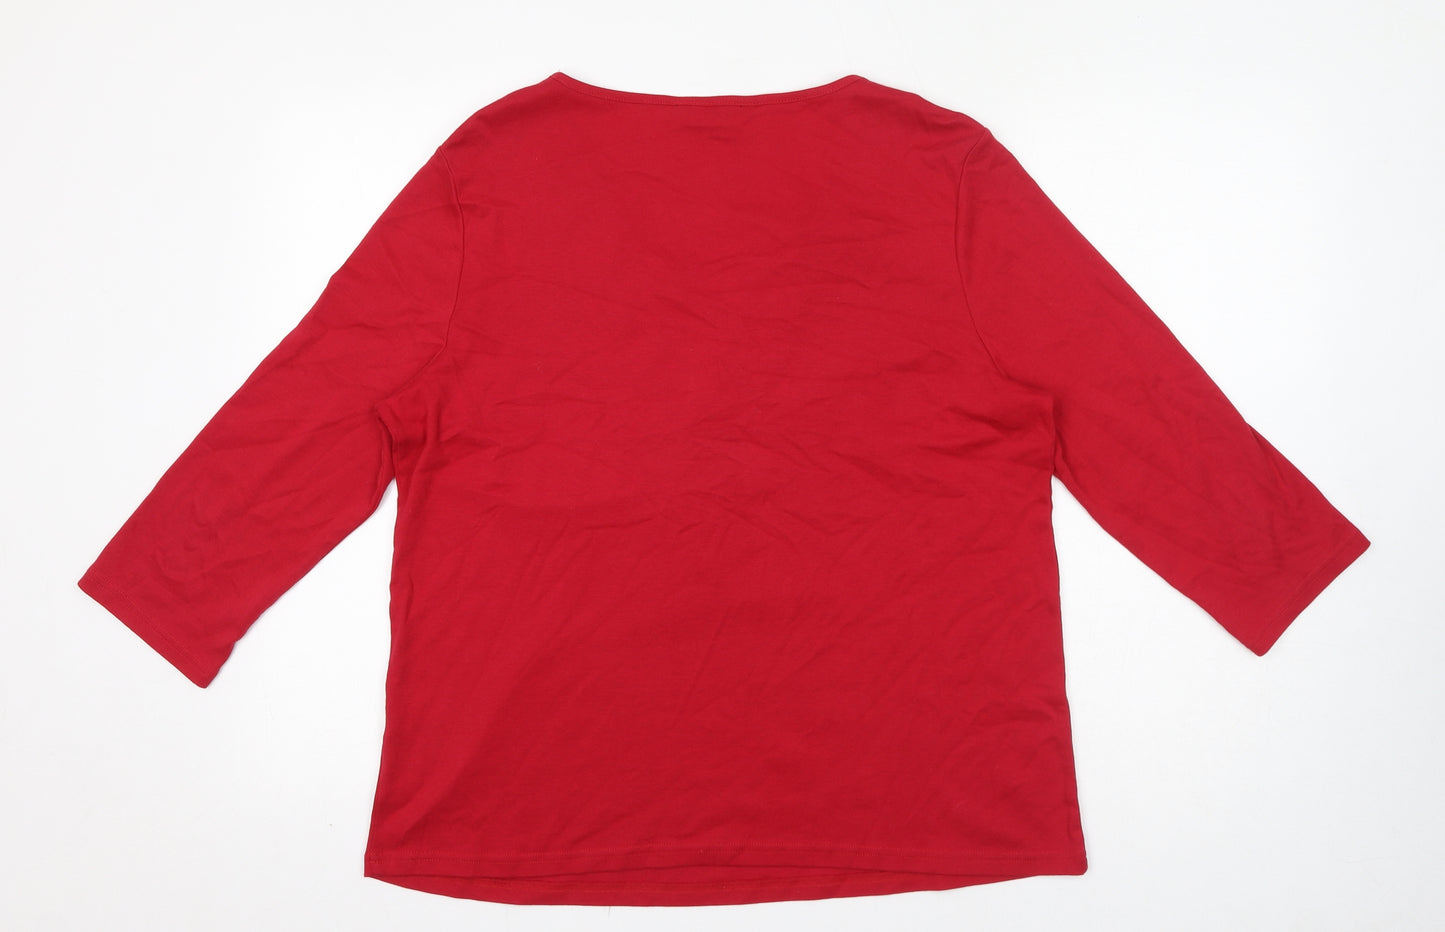 Debenhams Womens Red 100% Cotton Basic T-Shirt Size 18 V-Neck